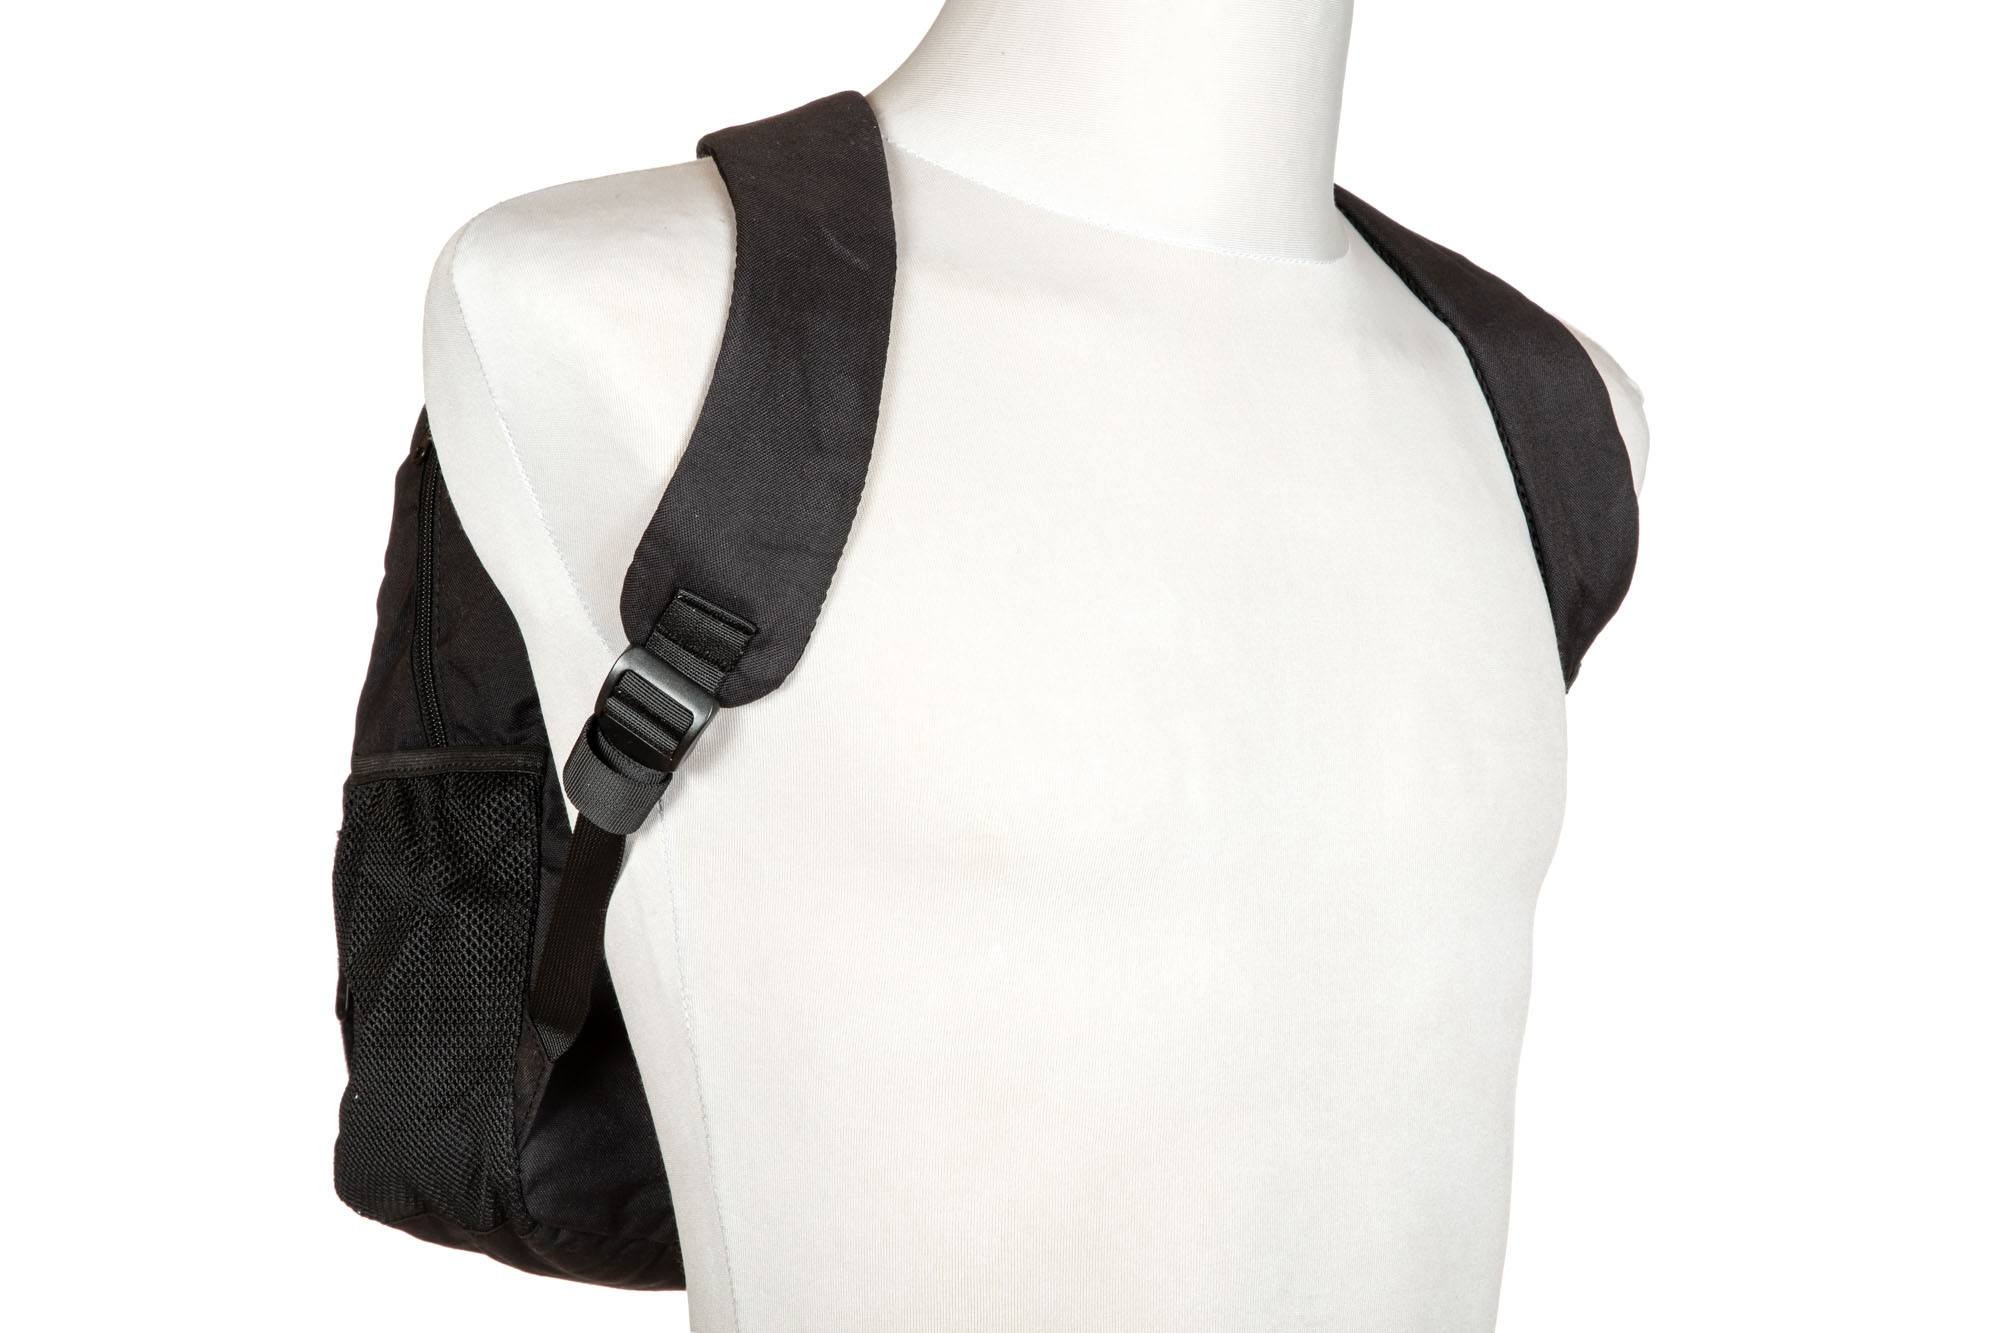 Foldable Backpack Dioc - Black